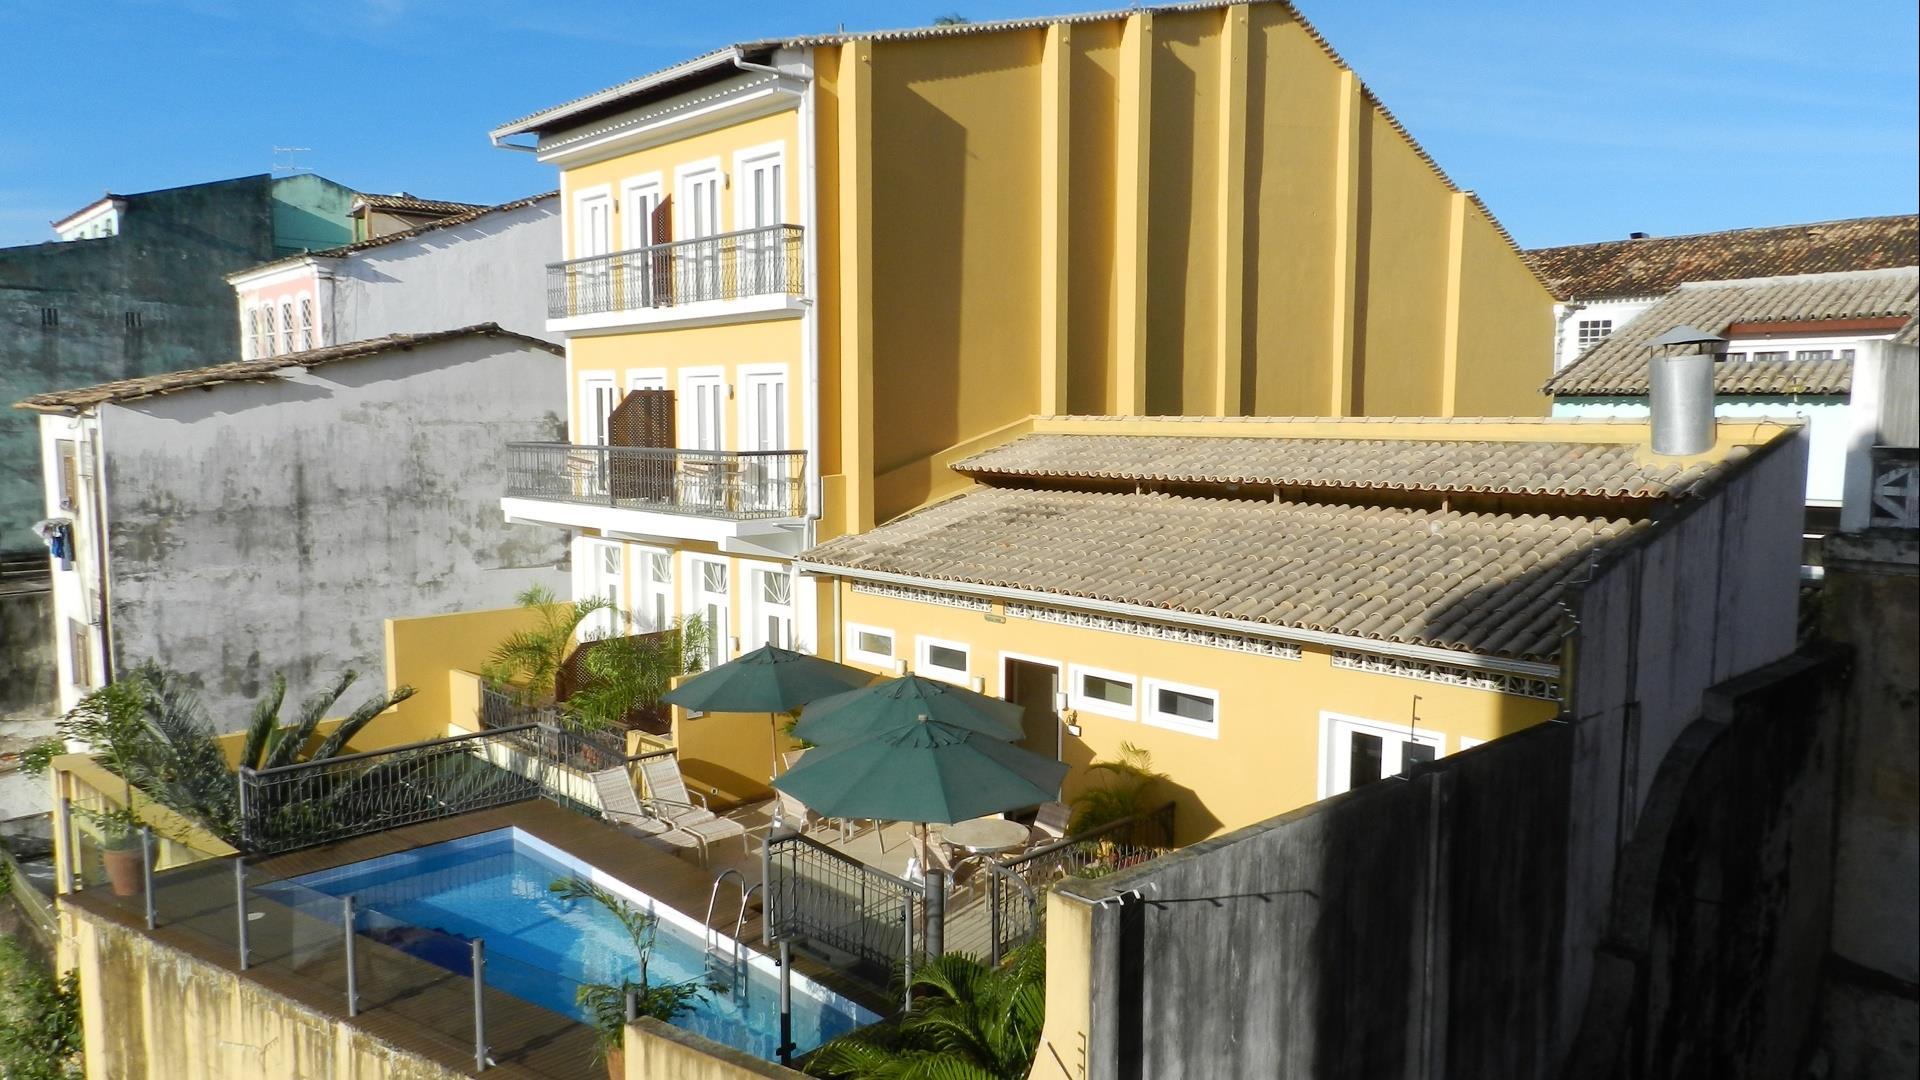 Hotel Casa do Amarelindo with its pool